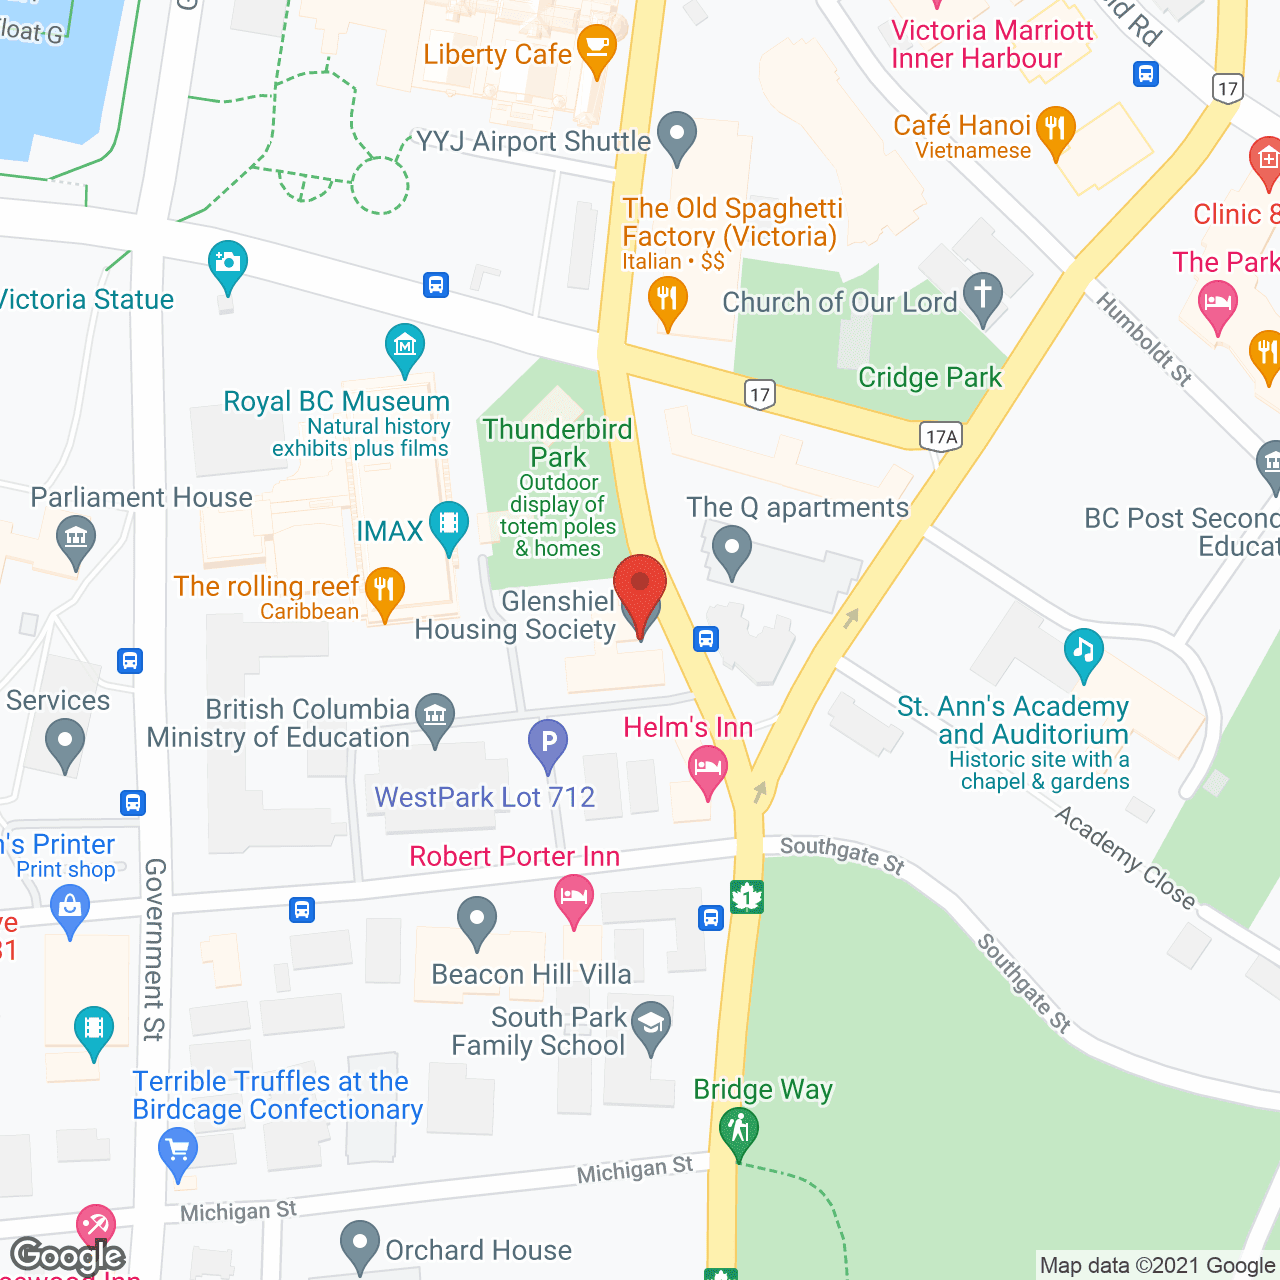 Glenshiel Housing Society in google map